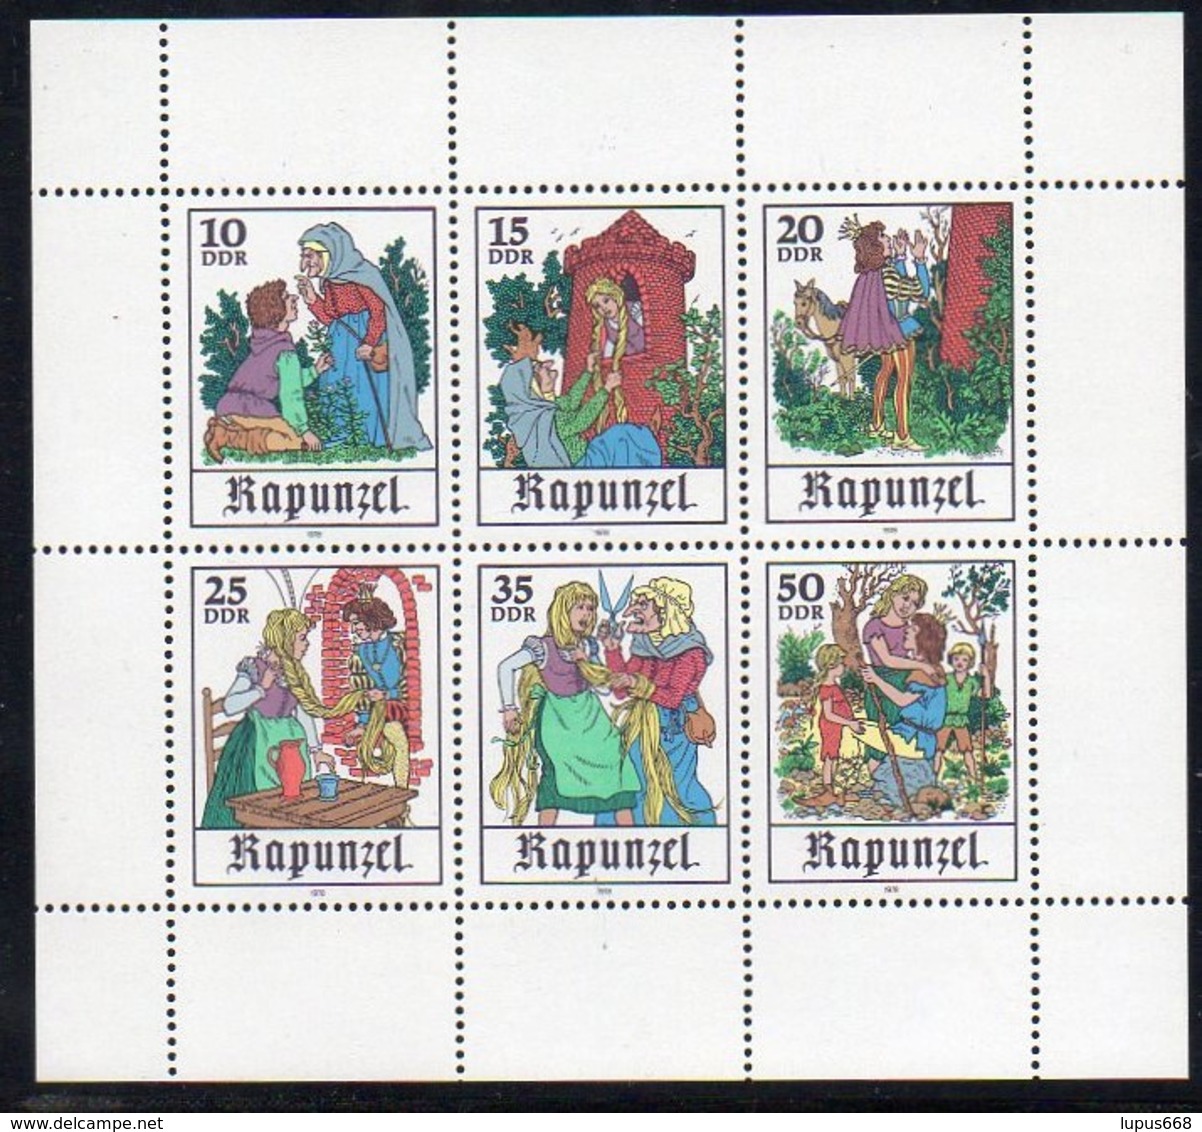 DDR 1978 MiNr. 2382/ 2387  ** /mnh ;  Kleinbogen Märchen: Rapunzel - Fairy Tales, Popular Stories & Legends